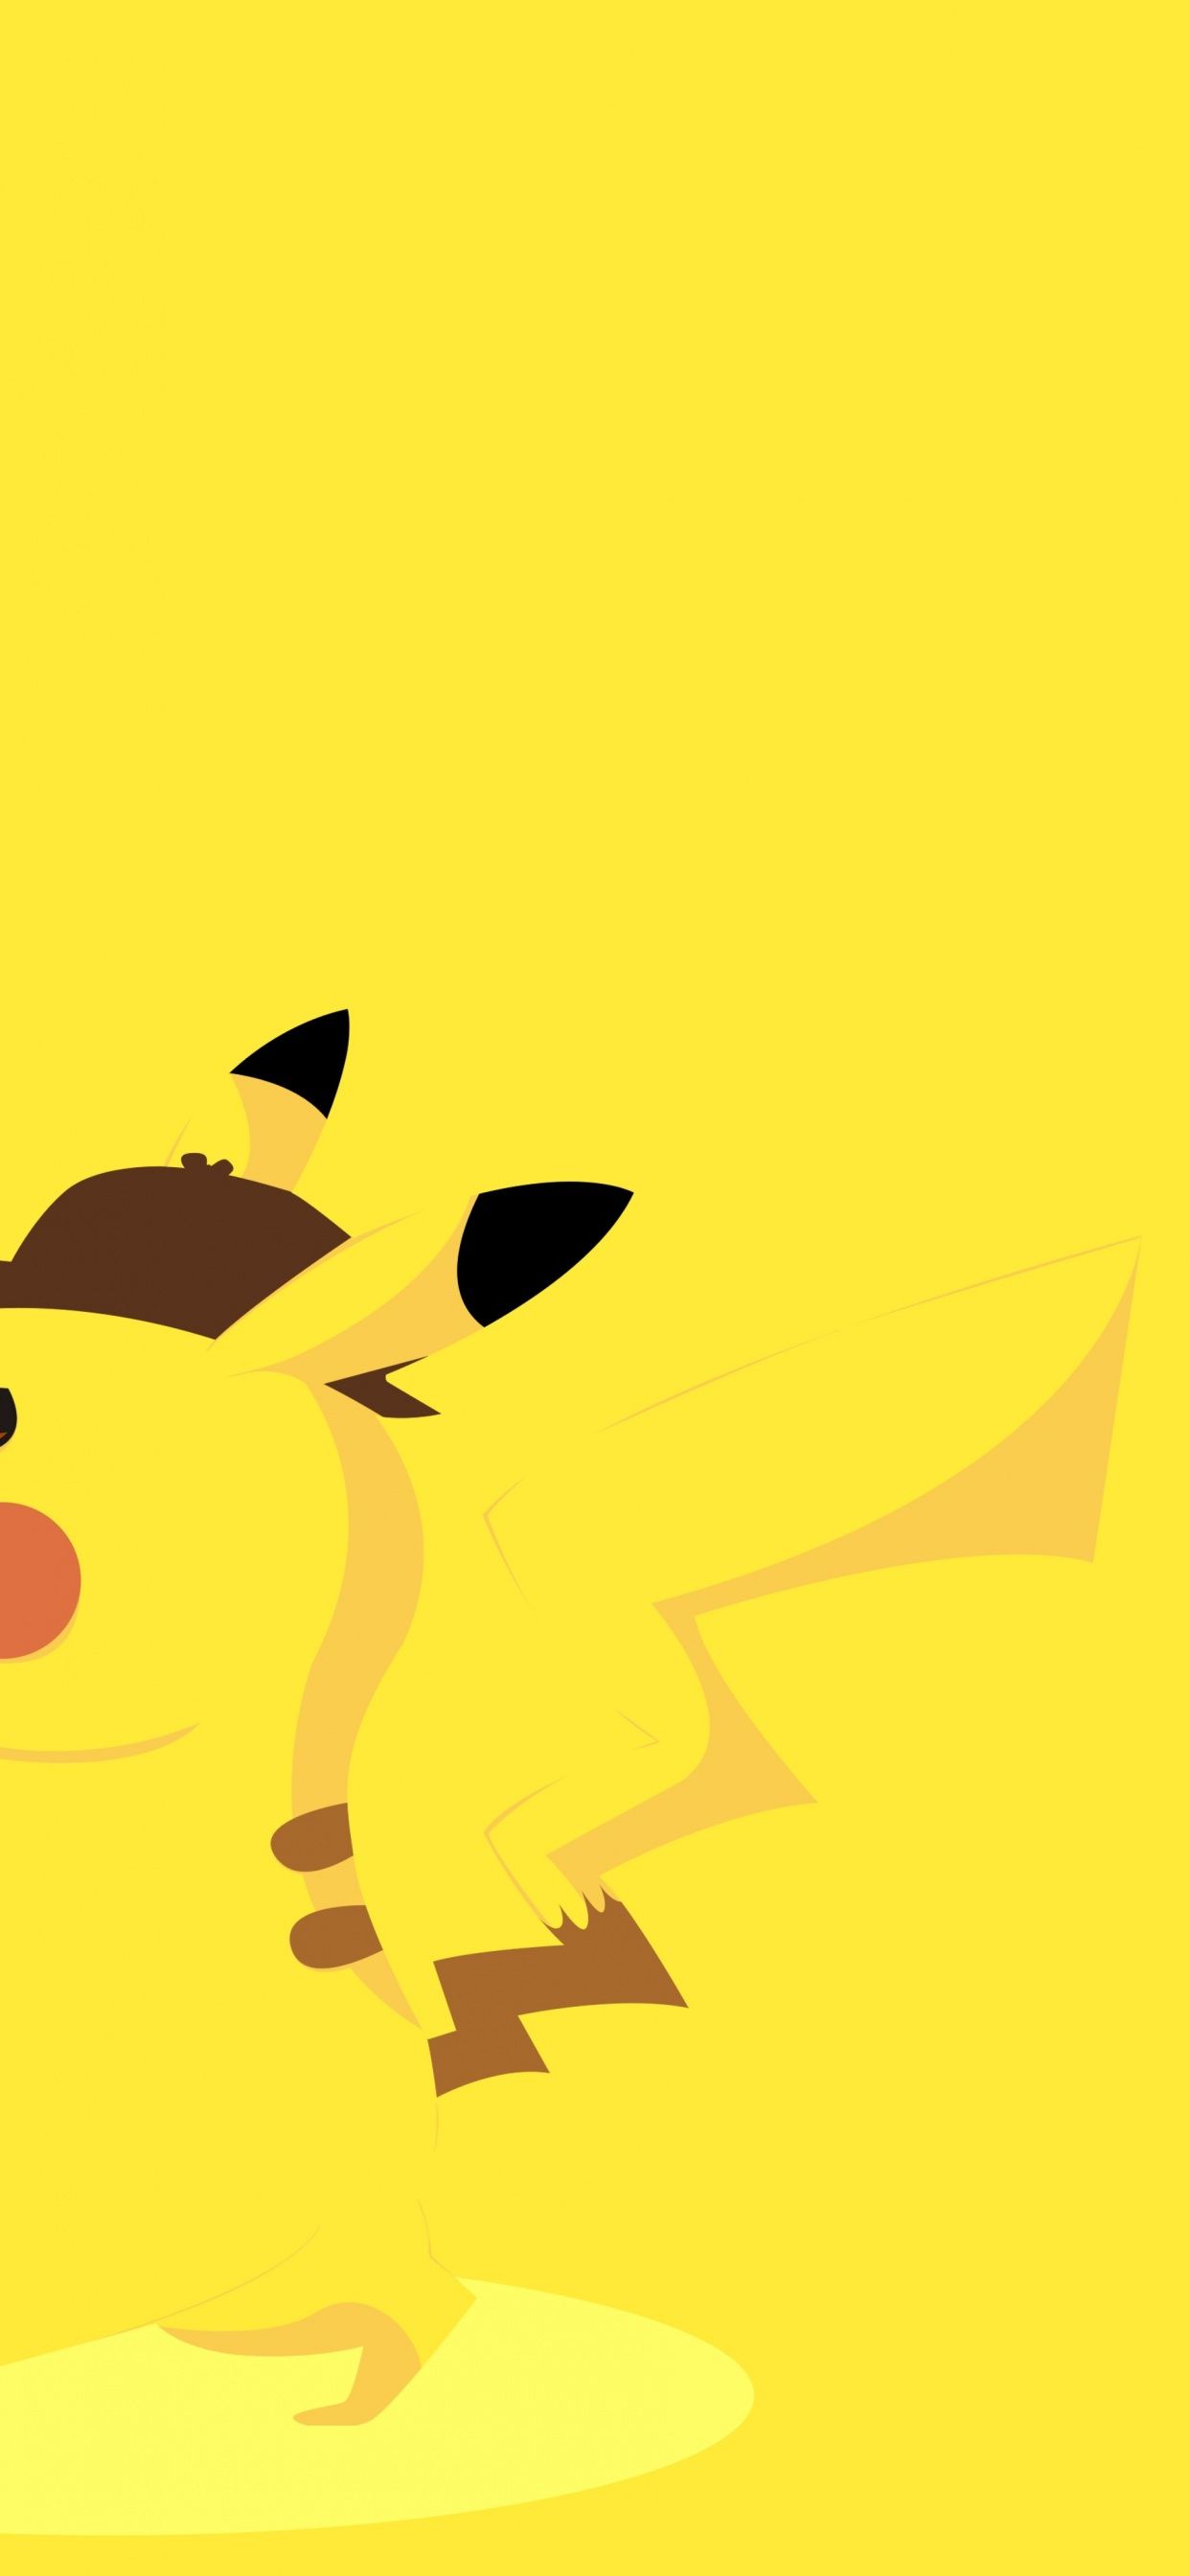  Pikachu Hintergrundbild 1242x2688. Pikachu Wallpaper 4K, Yellow background, Minimal art